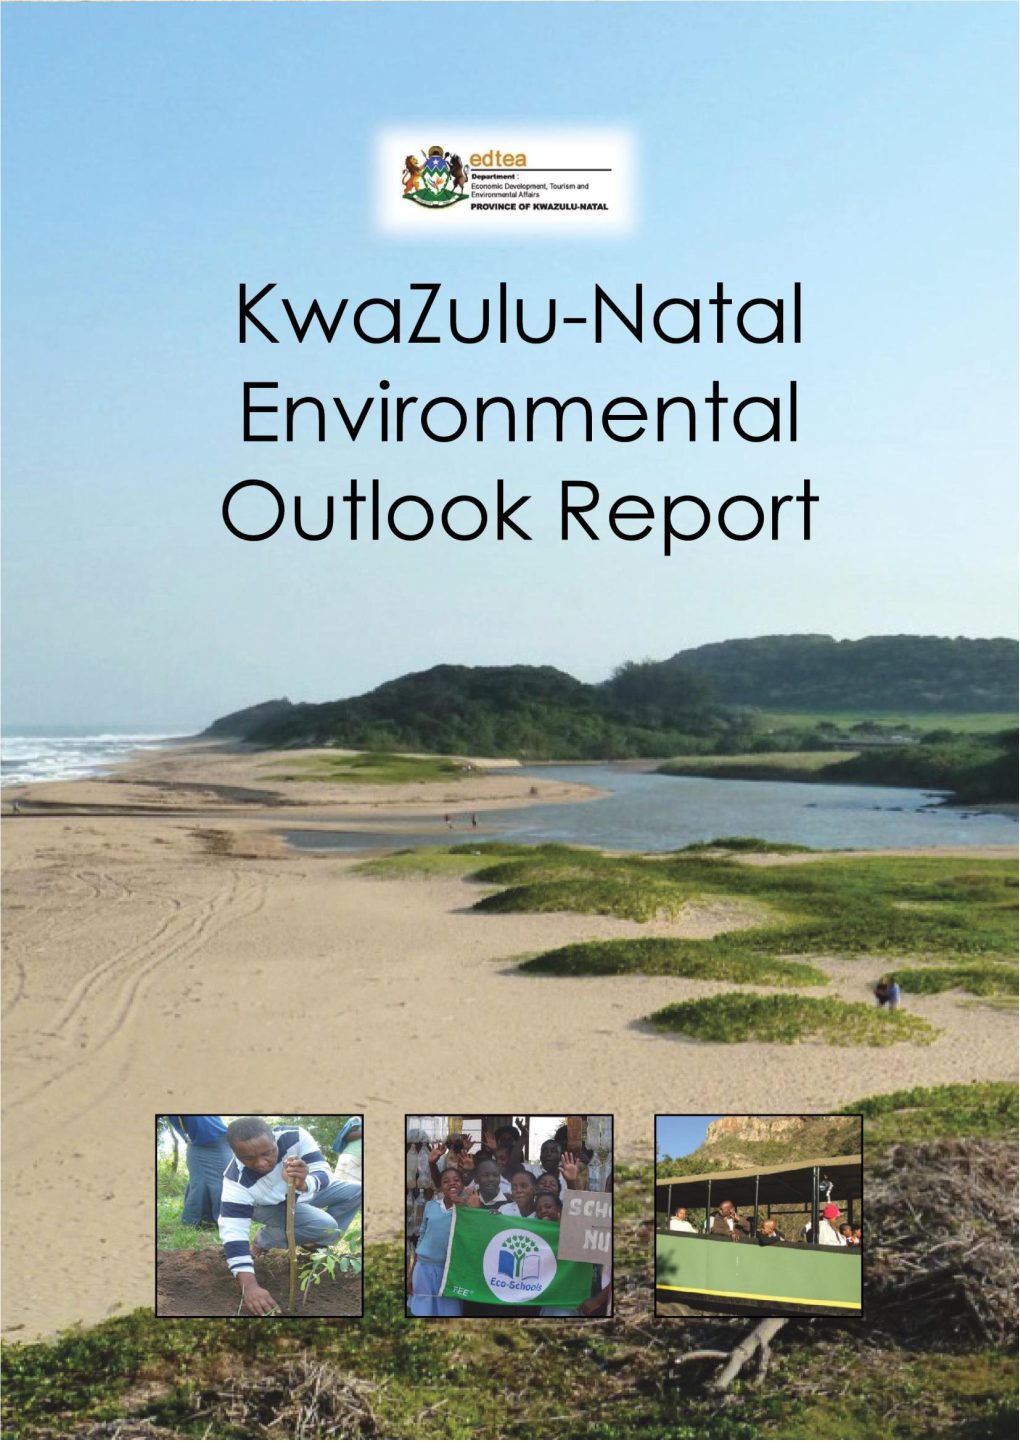 Kwazulu-Natal Environment Outlook Report 2017